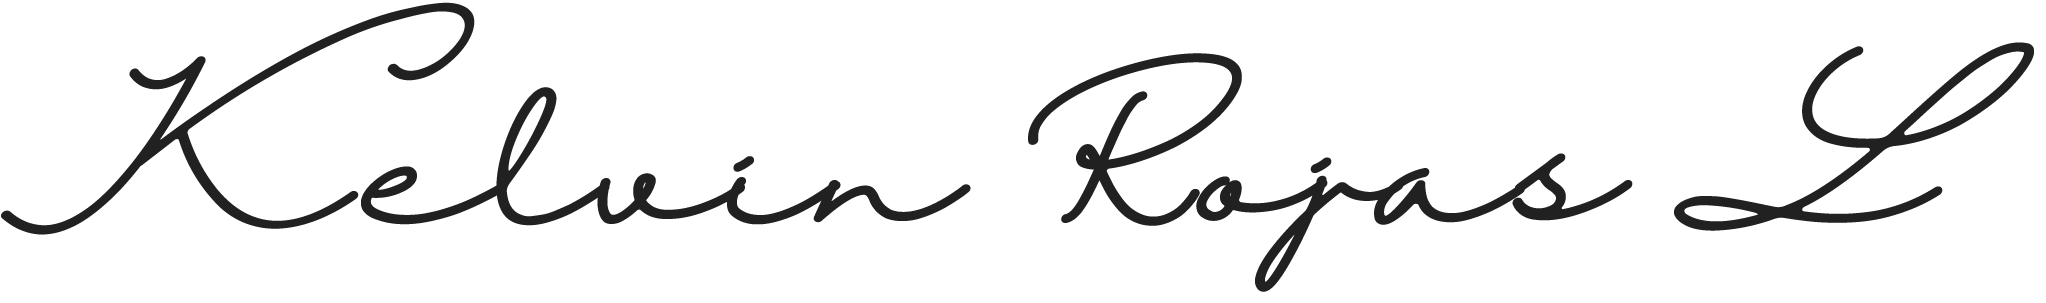 Kelvin Rojas signature